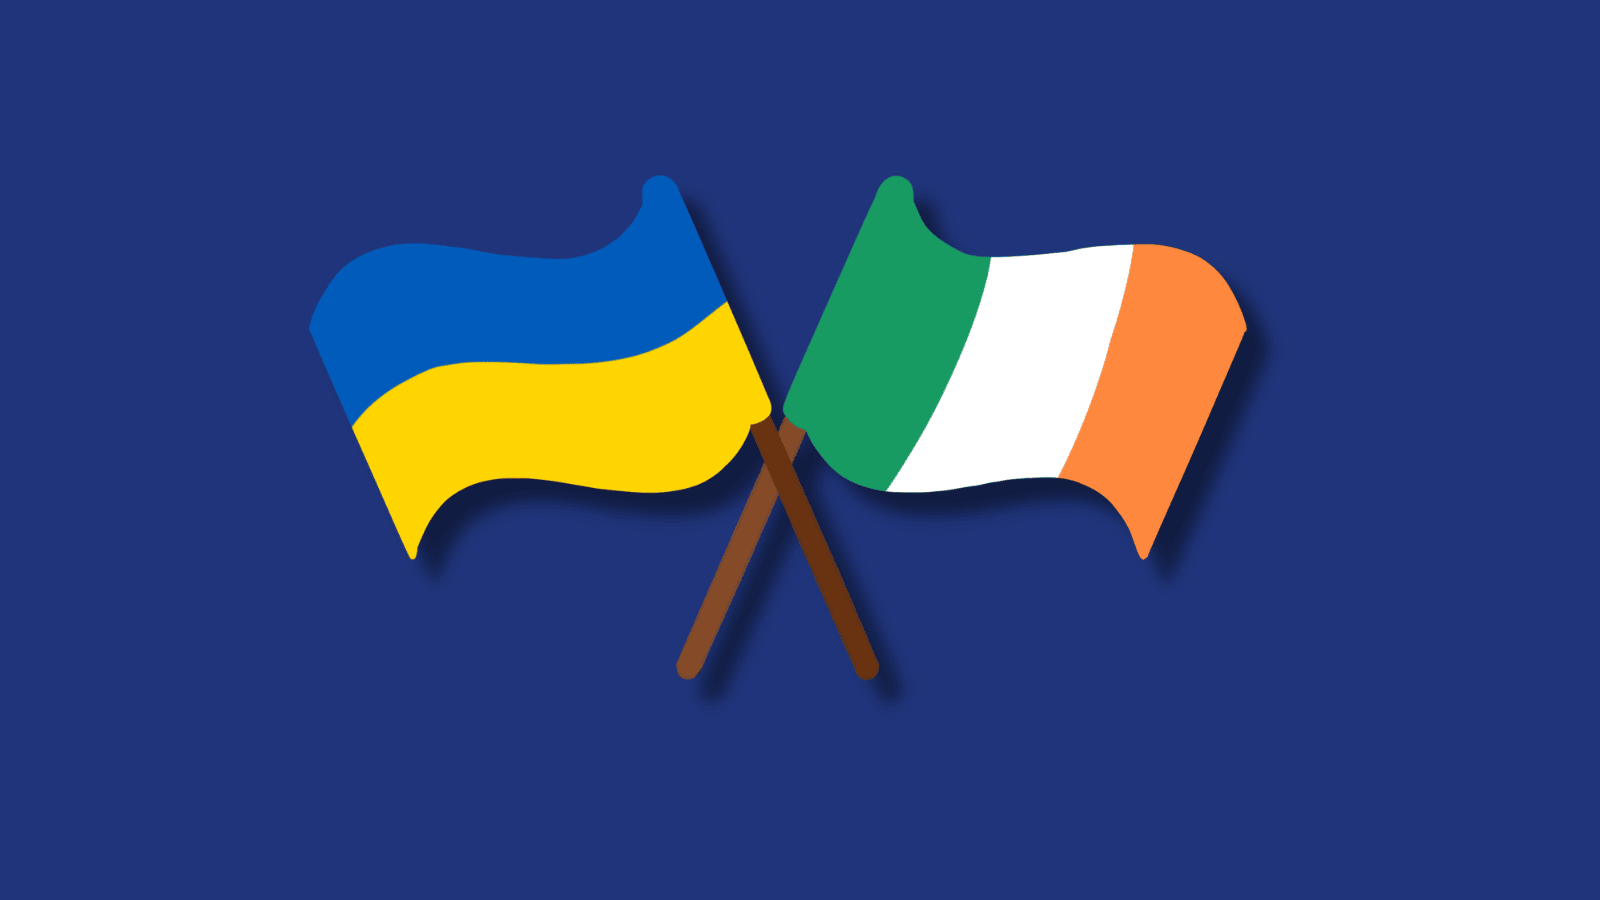 spunout resources for Ukrainians in Ireland - spunout